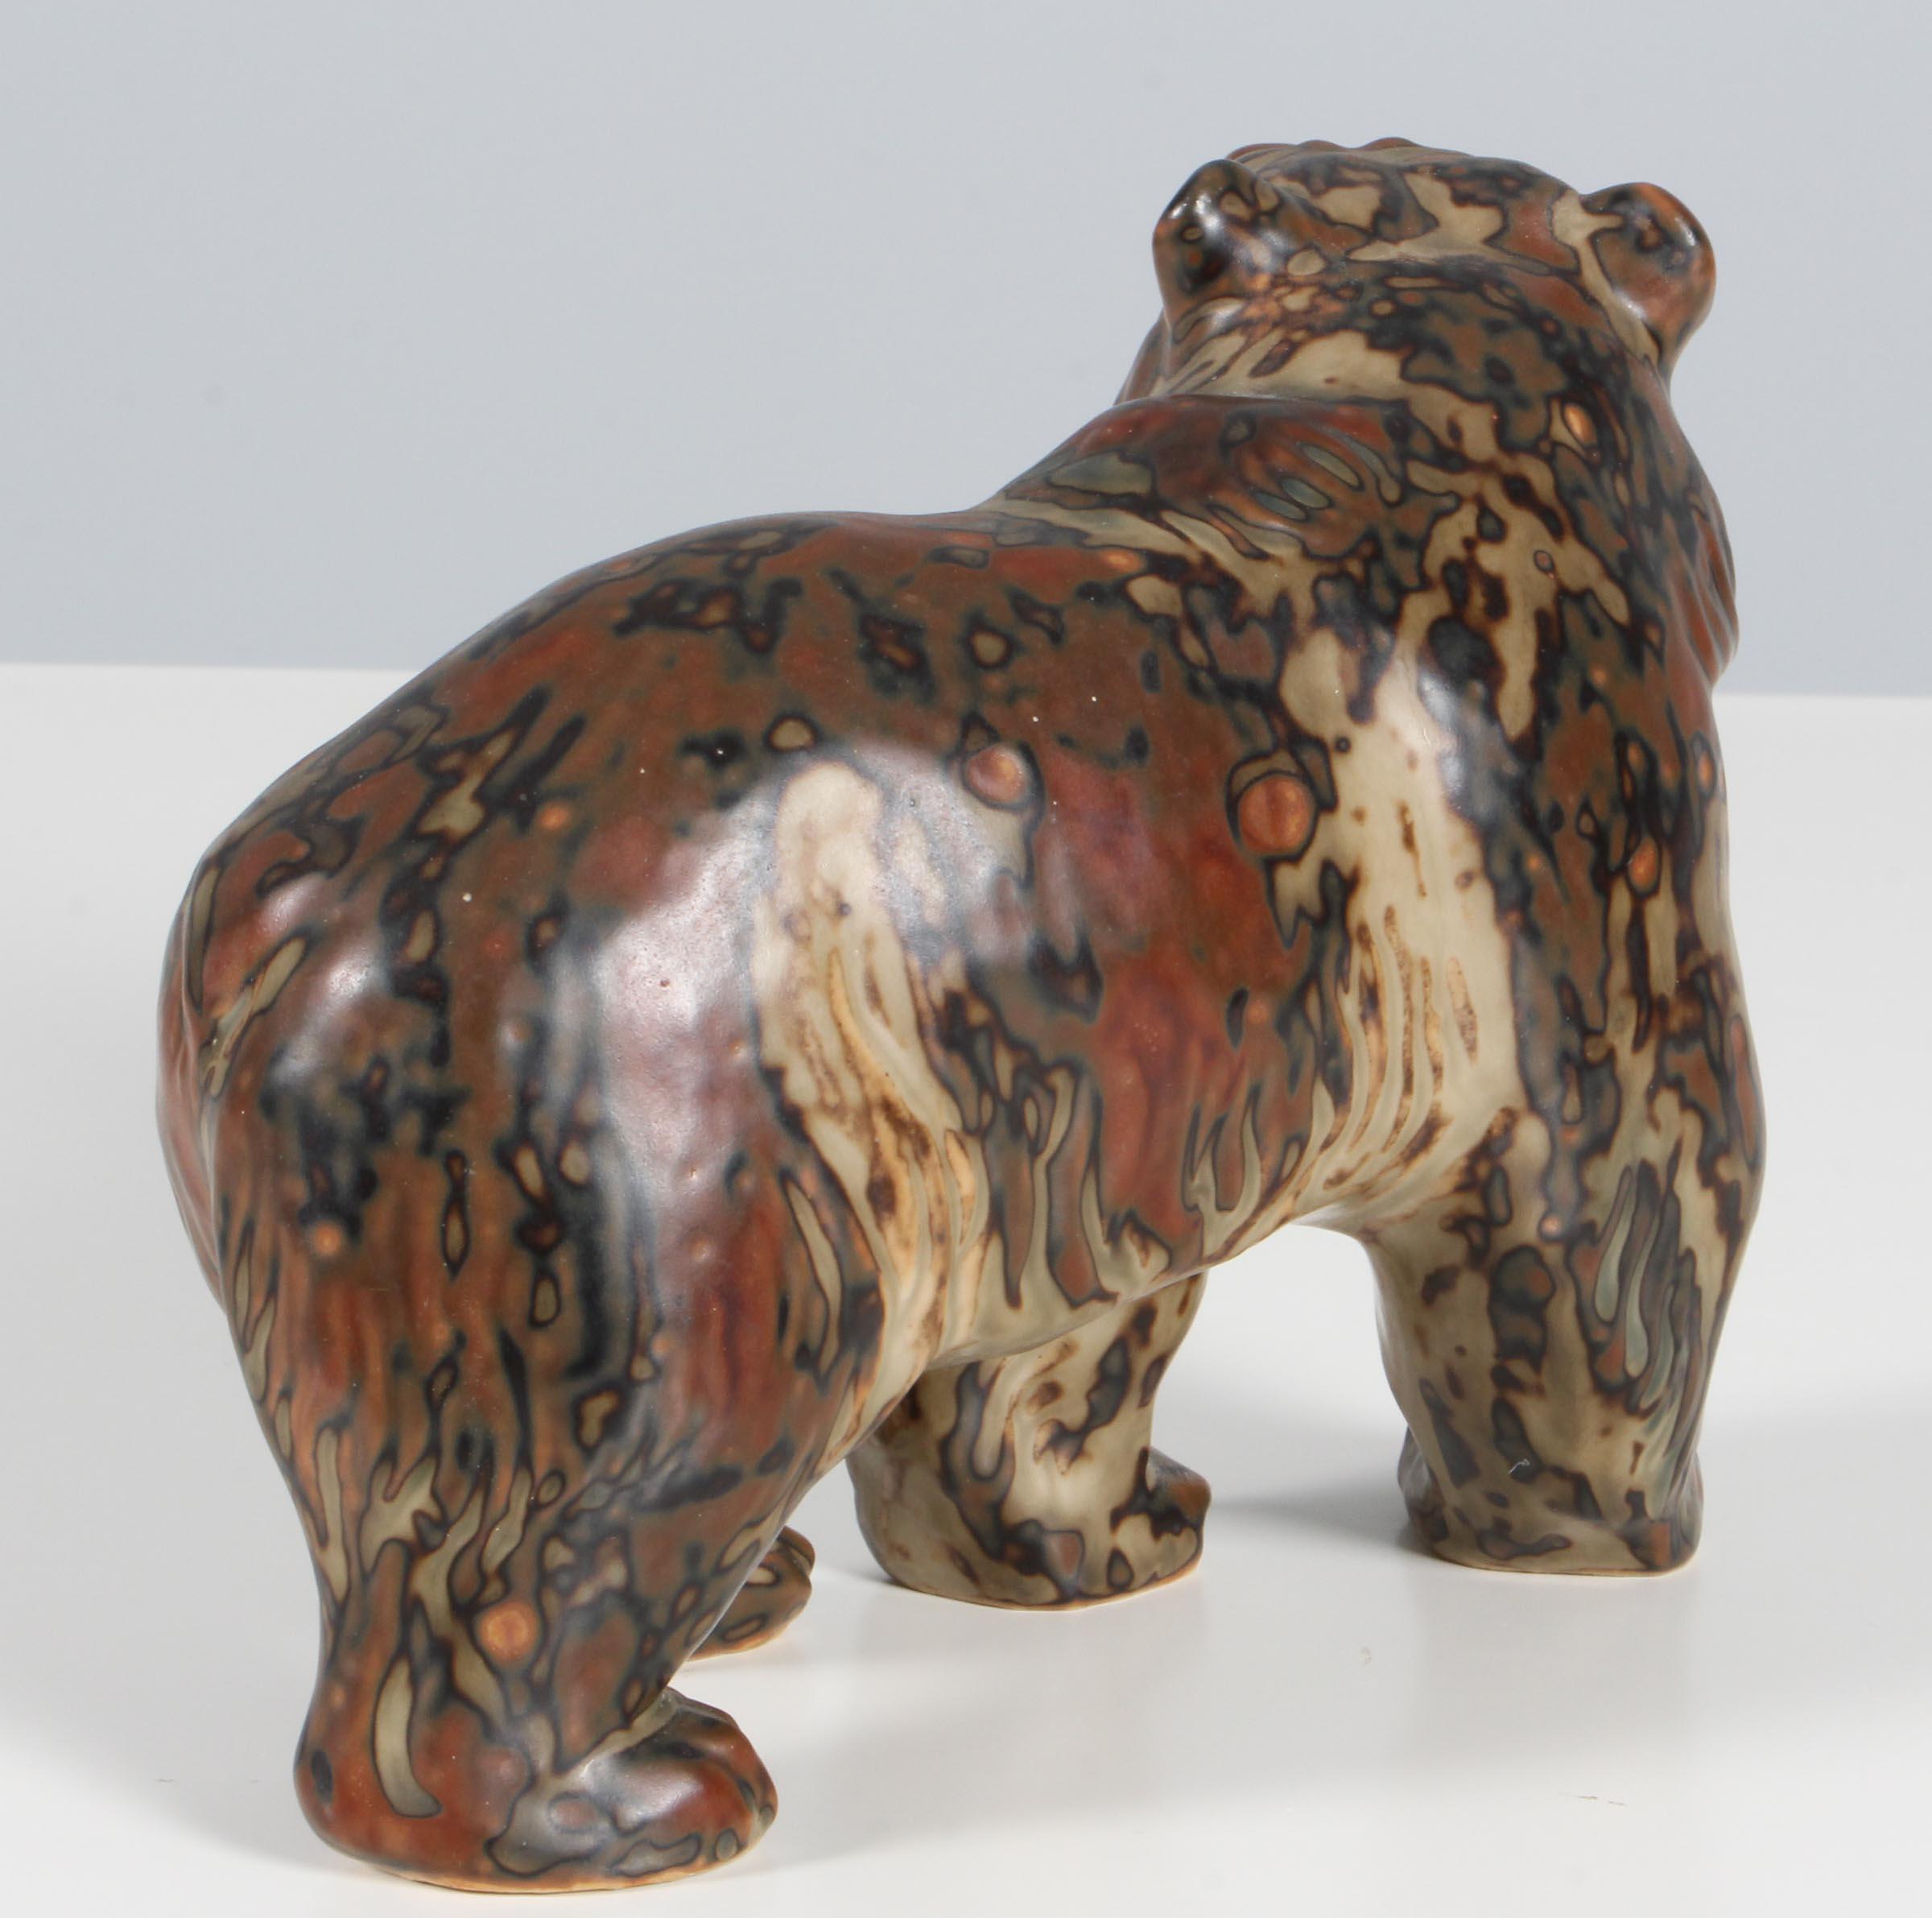 Danish Glazed Stoneware Bear Figurine, Knud Kyhn for Royal Copenhagen #20155